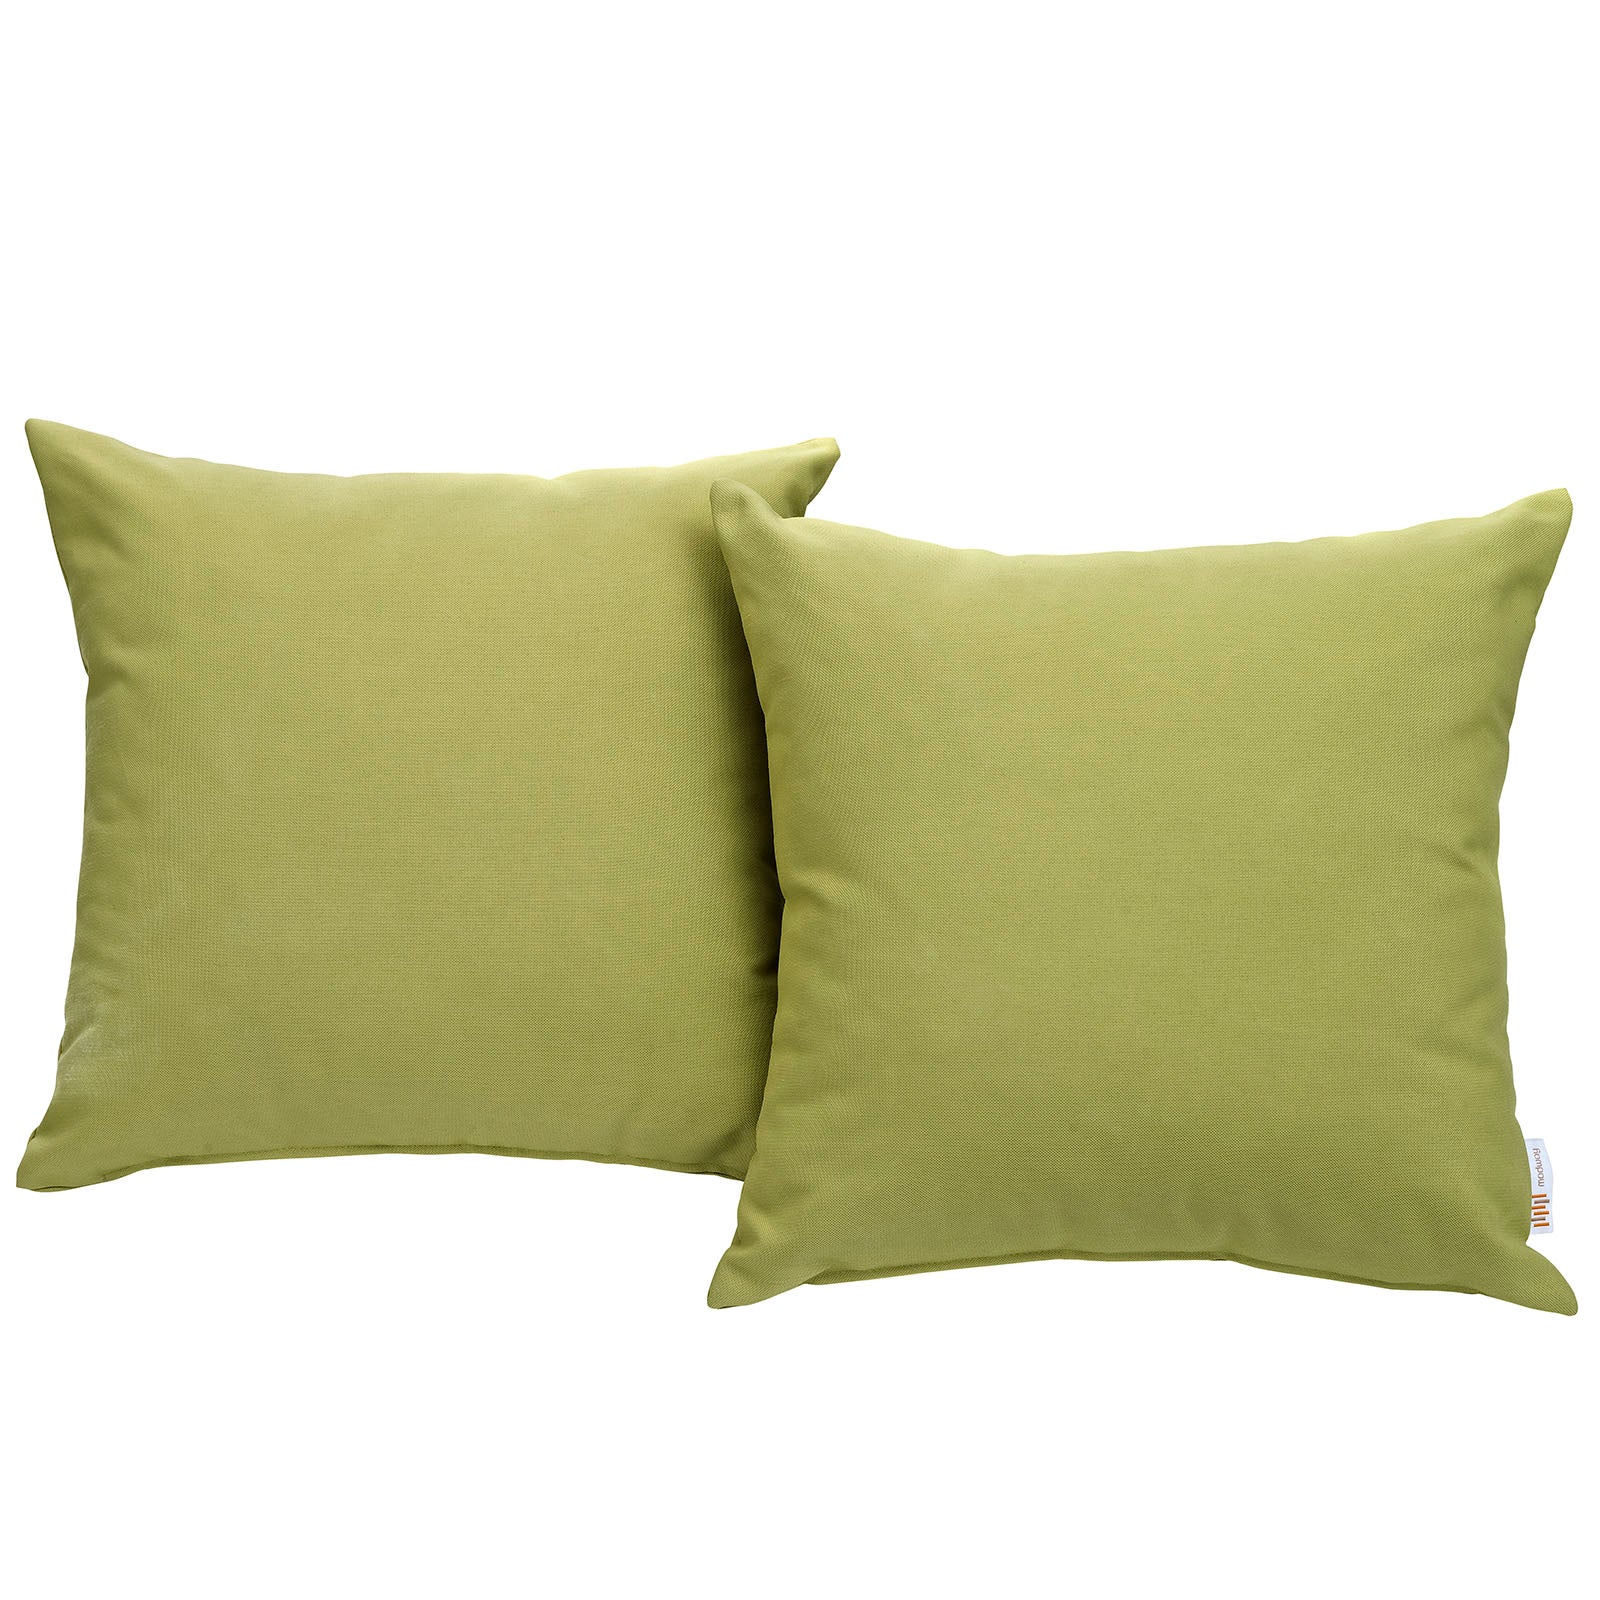 Convene Two Piece Outdoor Patio Pillow Set - East Shore Modern Home Furnishings